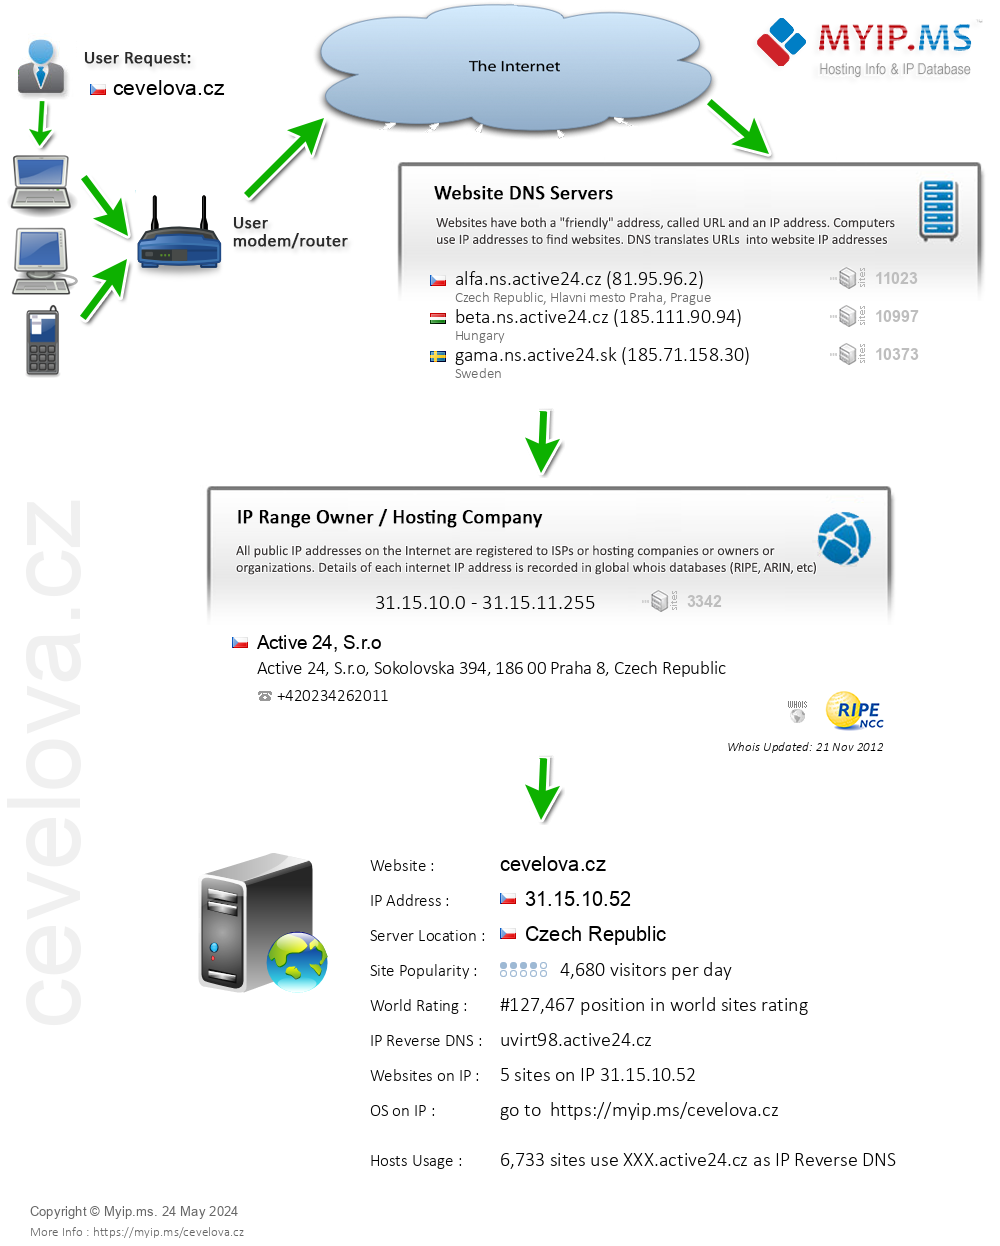 Cevelova.cz - Website Hosting Visual IP Diagram